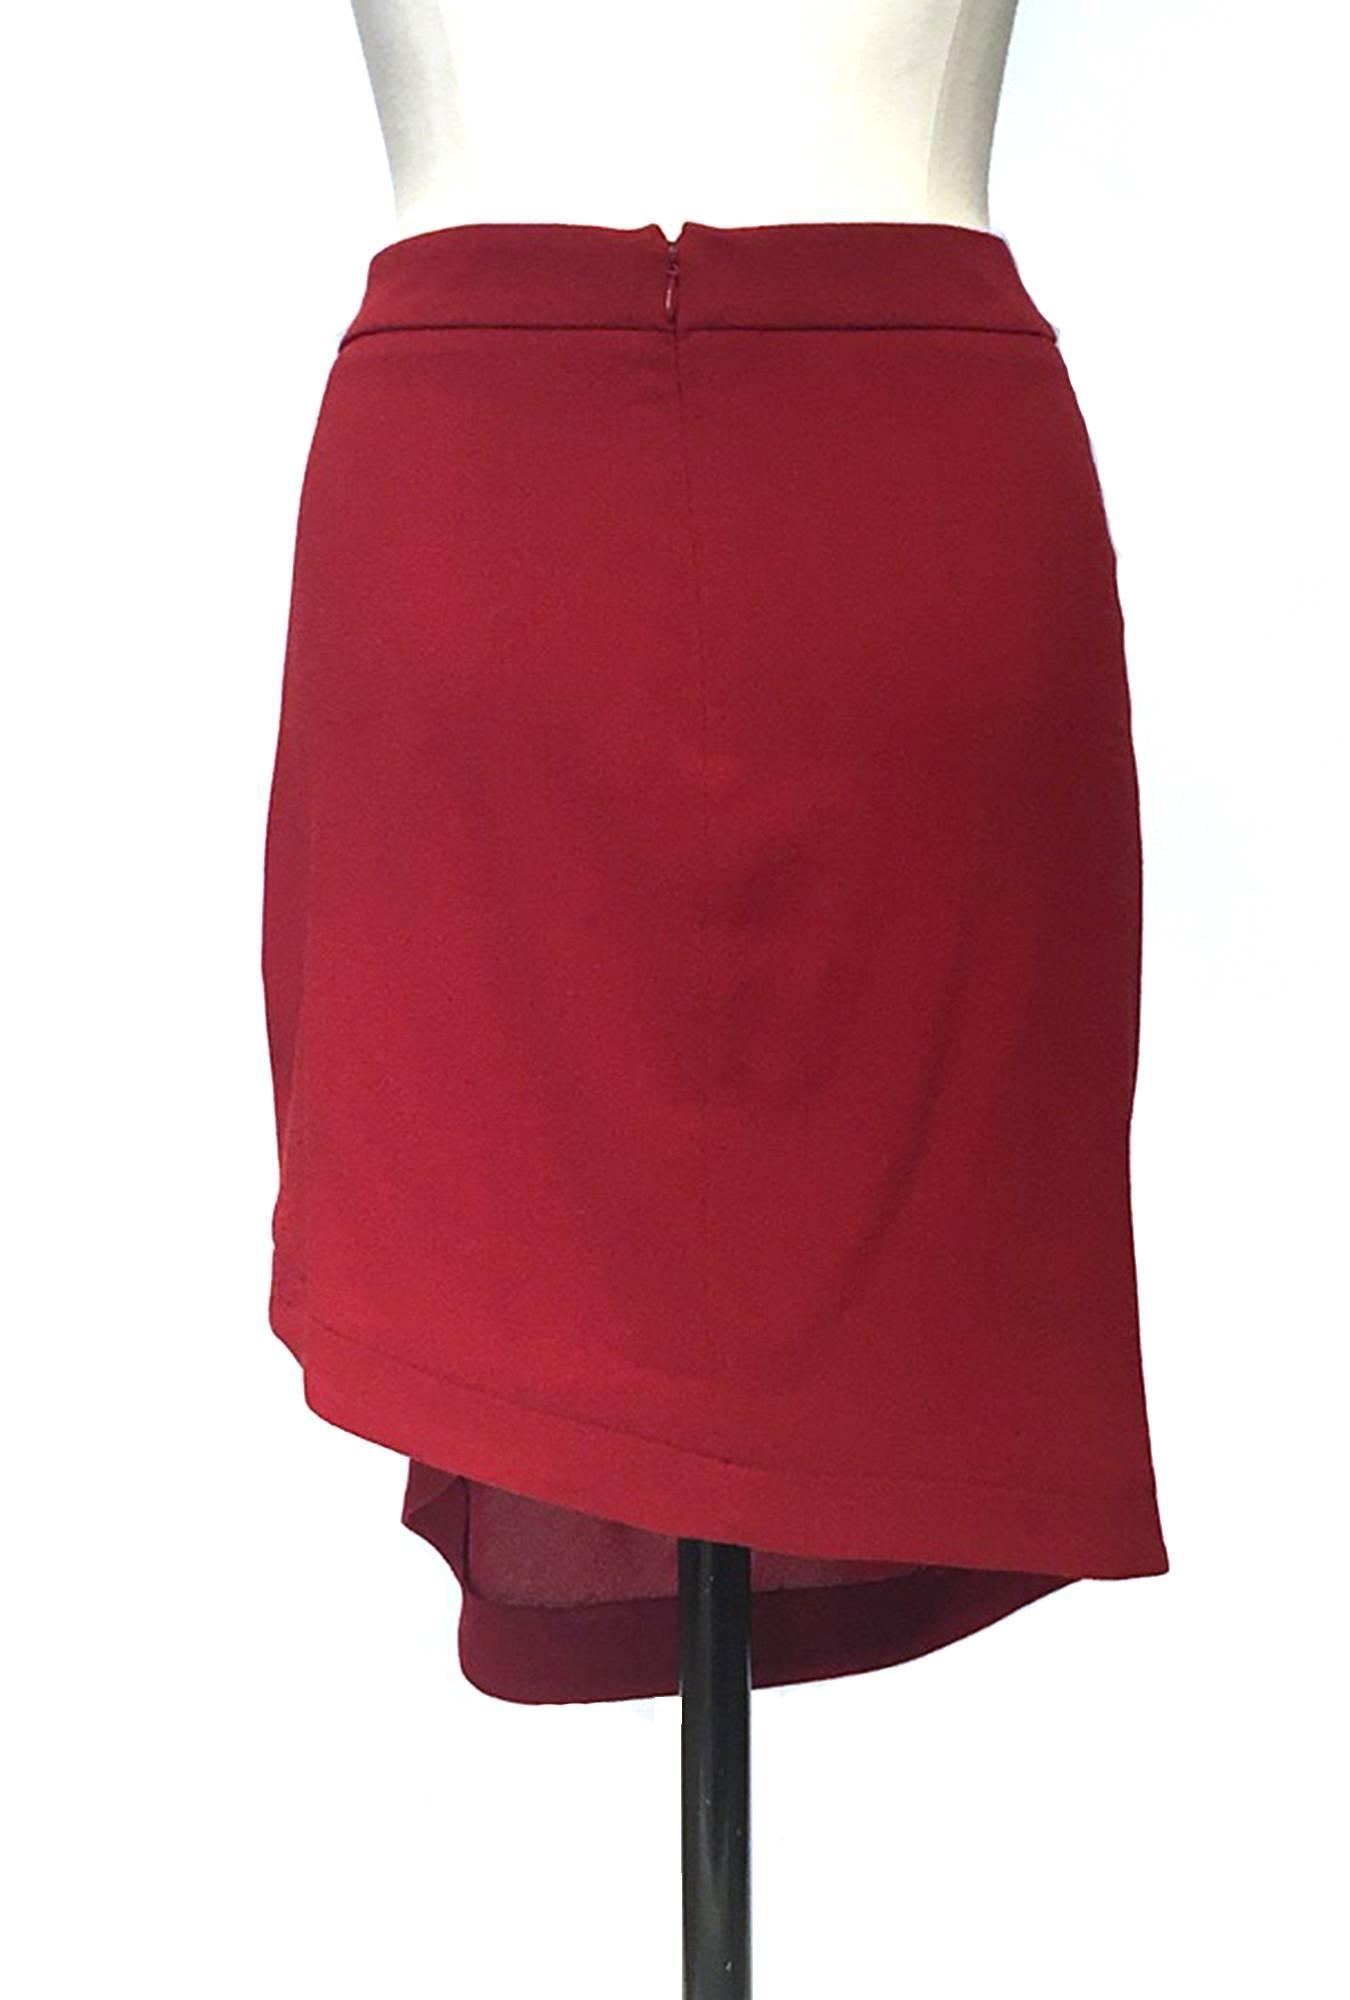 Women's Balenciaga by Nicolas Ghesquiere Rust Skirt with asymmetrical front, Sz. S